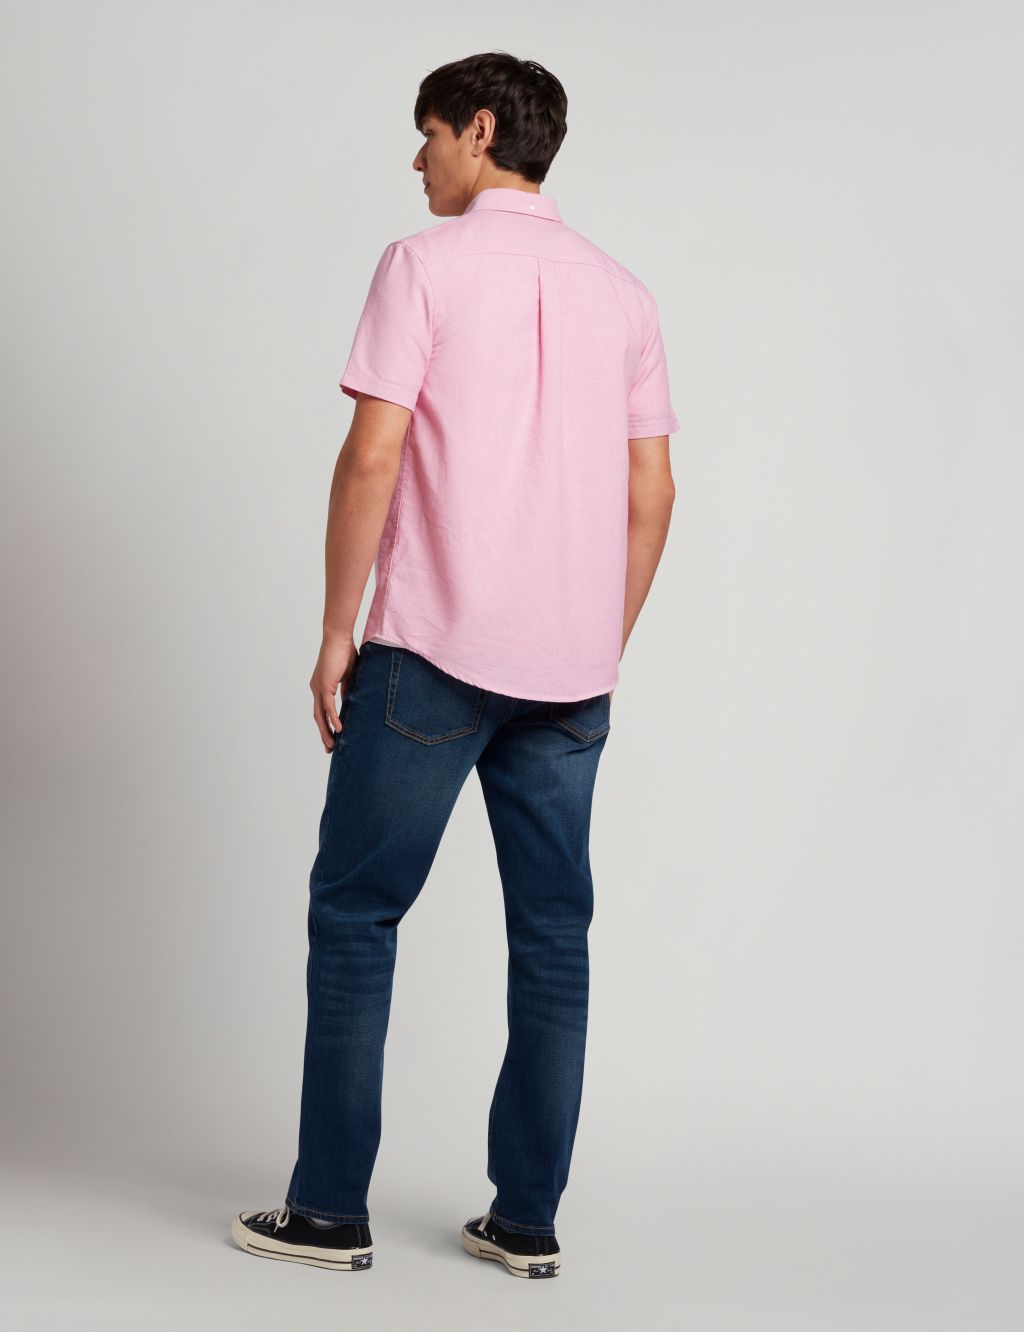 Cotton Blend Oxford Shirt image 3